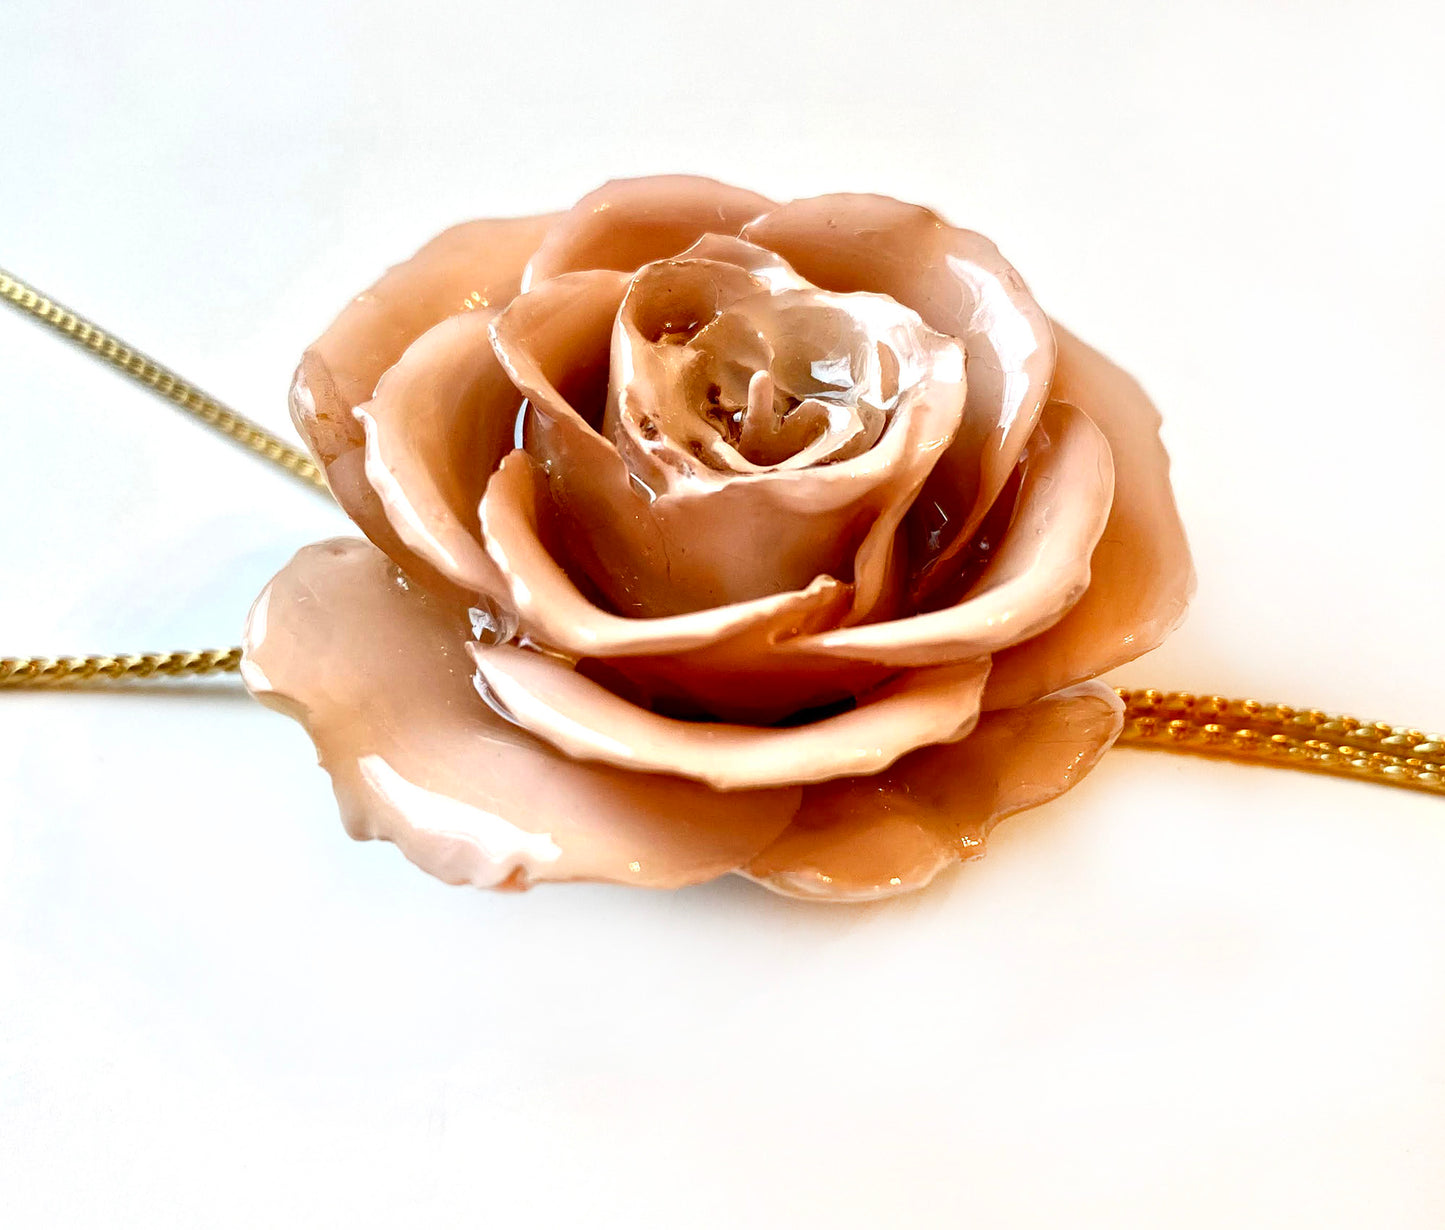 Mini Rose Mini 1.5-2.25 inch Pendant Necklace 18 inch Gold Plated 24K (Peach)